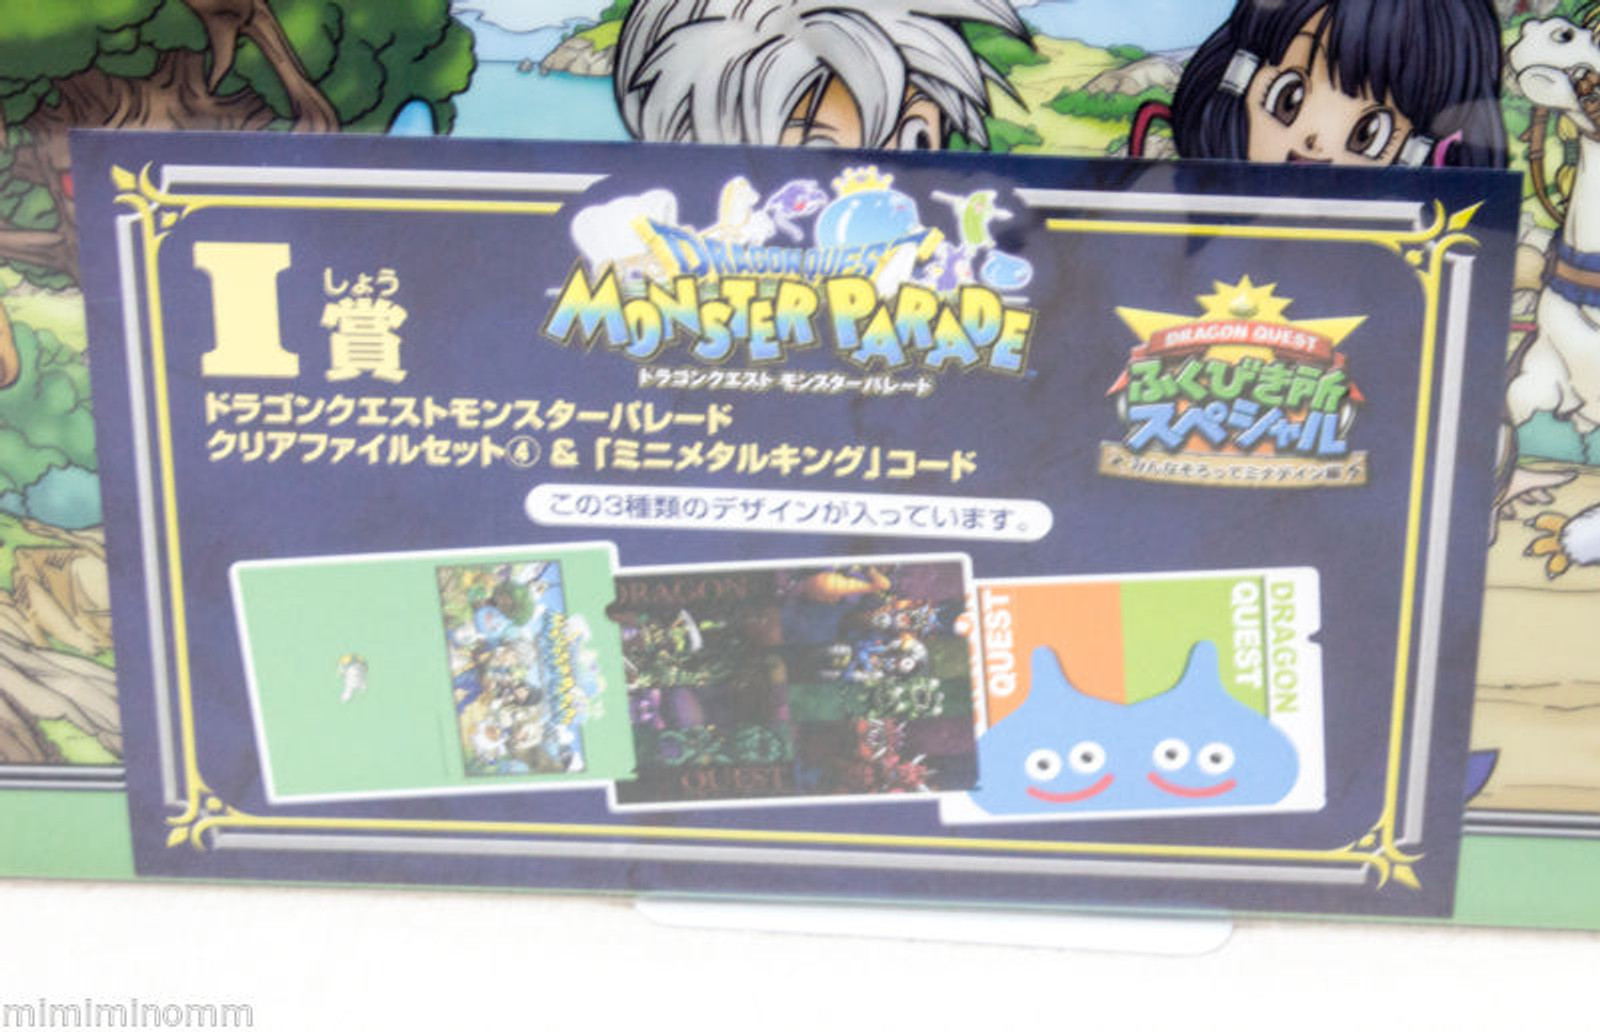 Dragon Quest Monster Parade File Folder Set 4 SQUARE ENIX JAPAN ANIME GAME